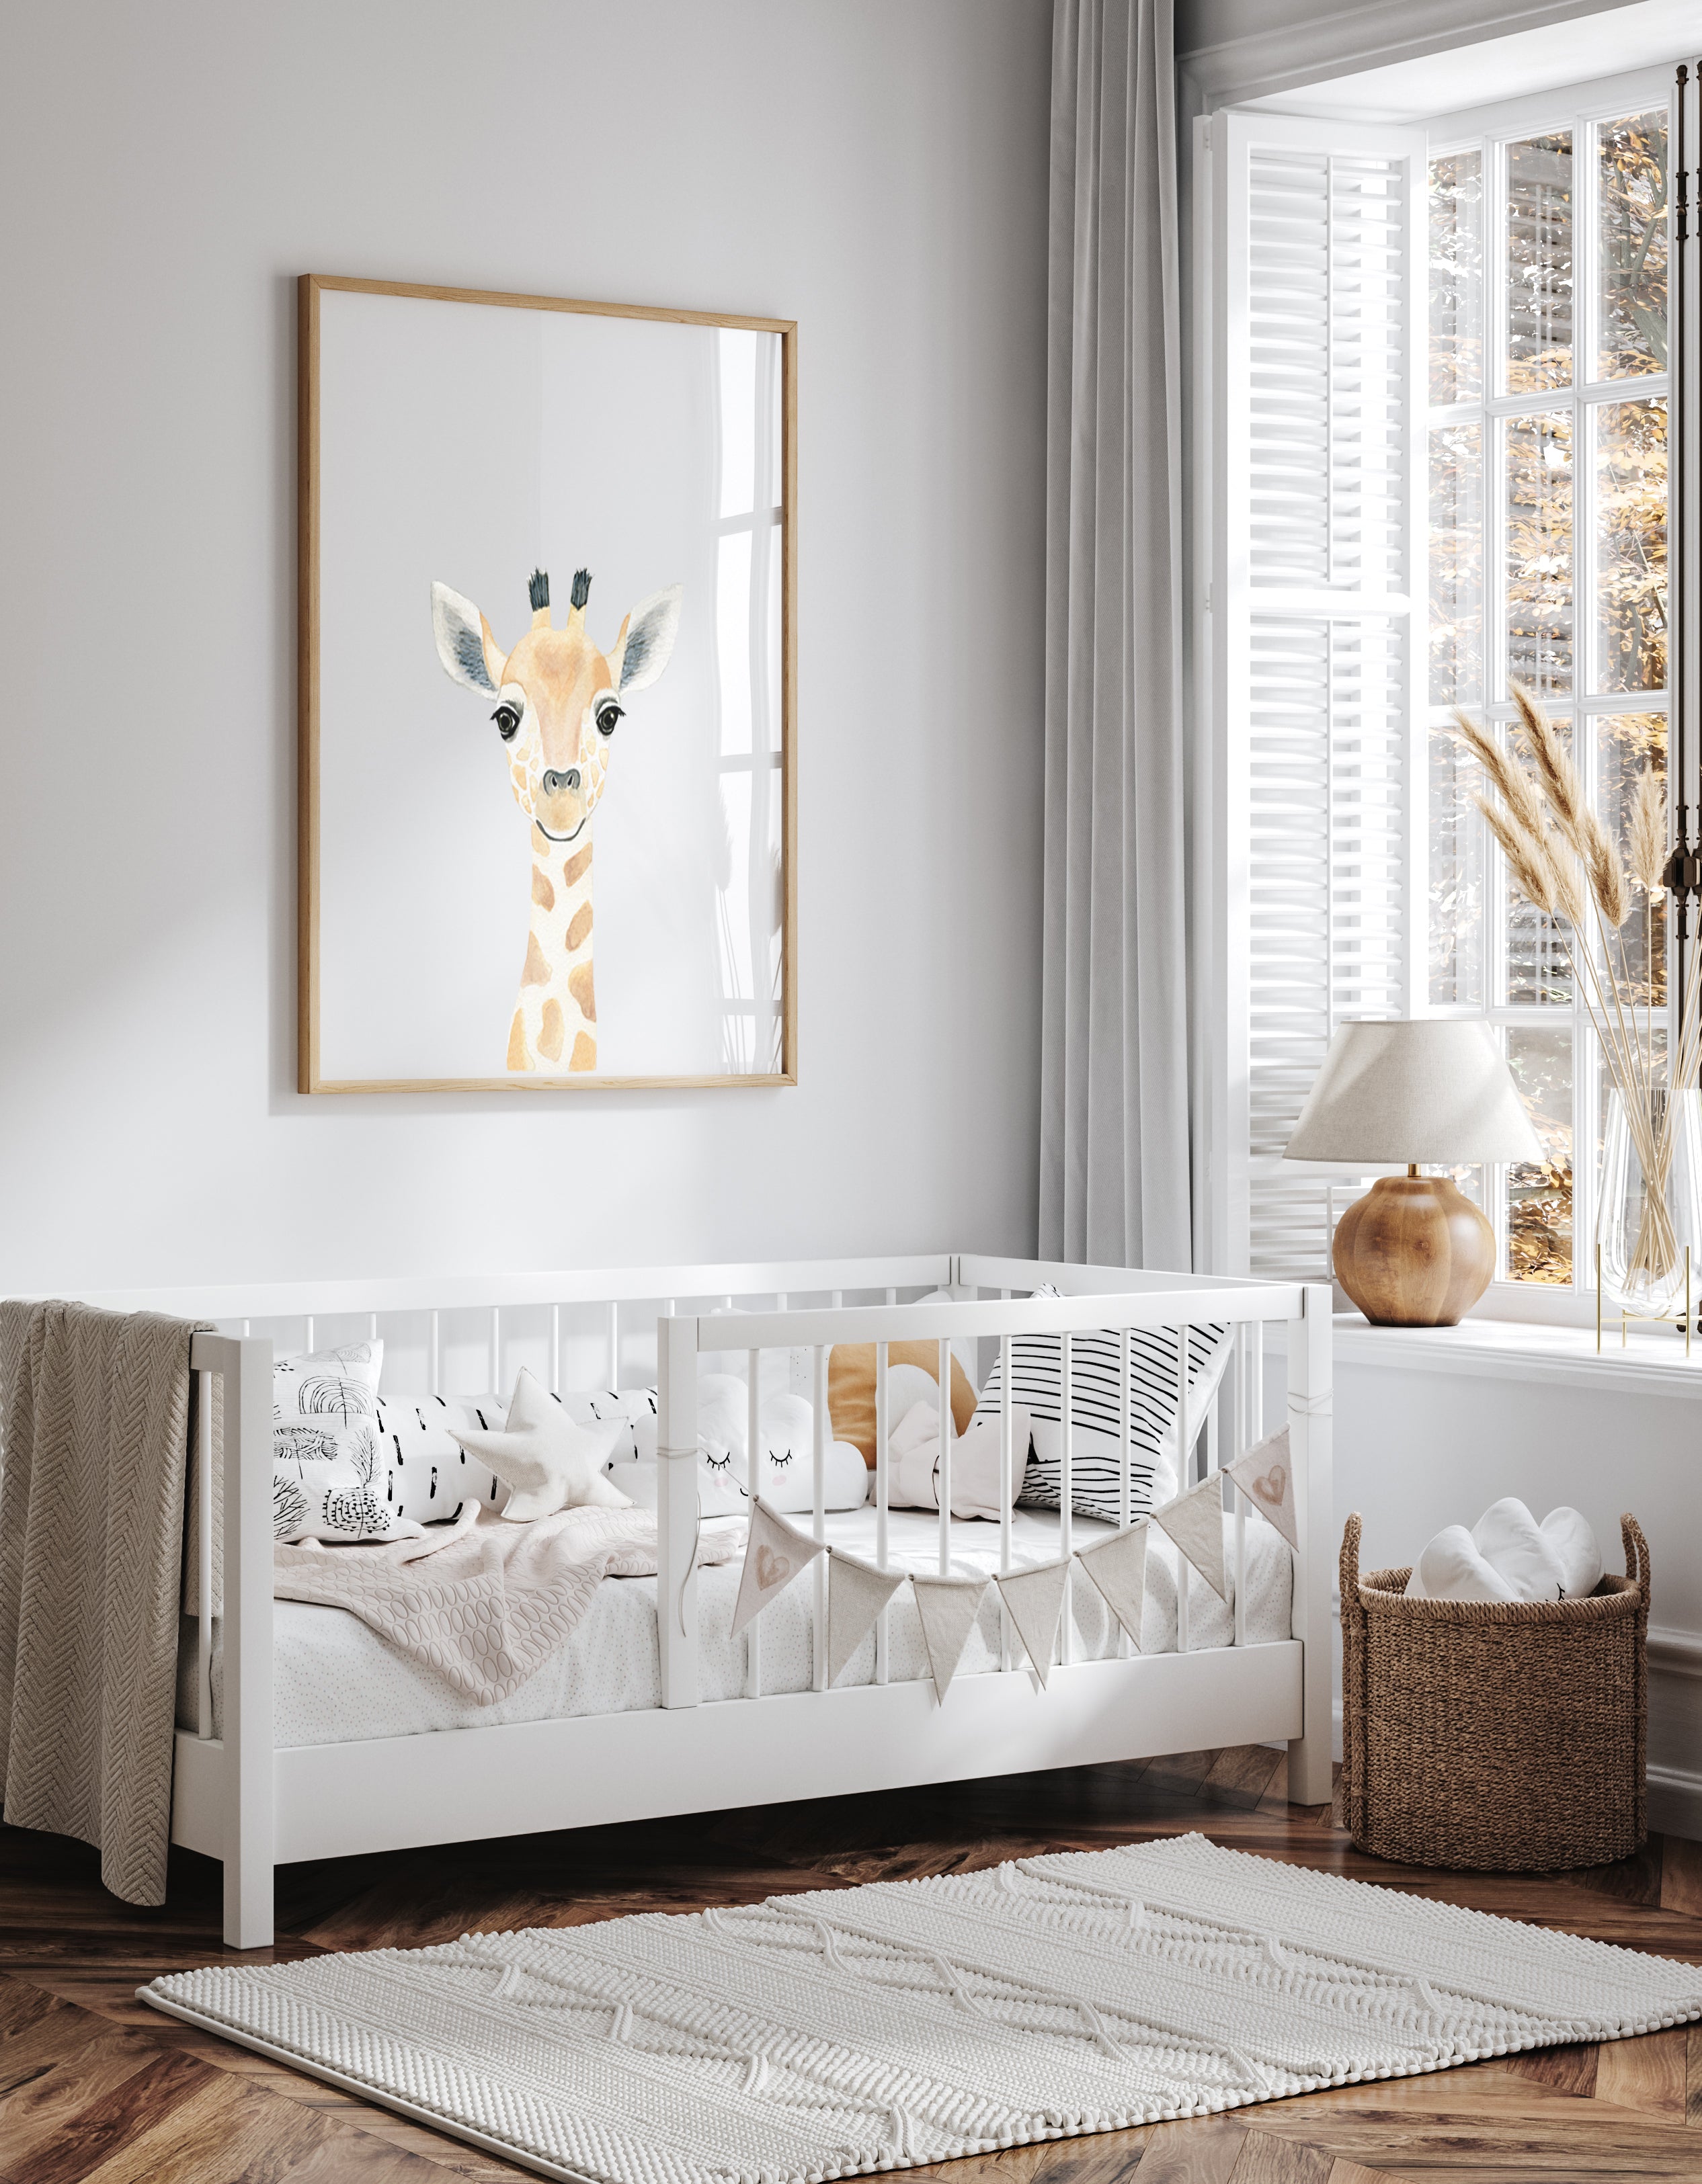 Baby Giraffe - Safari Animals Nursery - The Small Art Project - Modern Nursery Prints